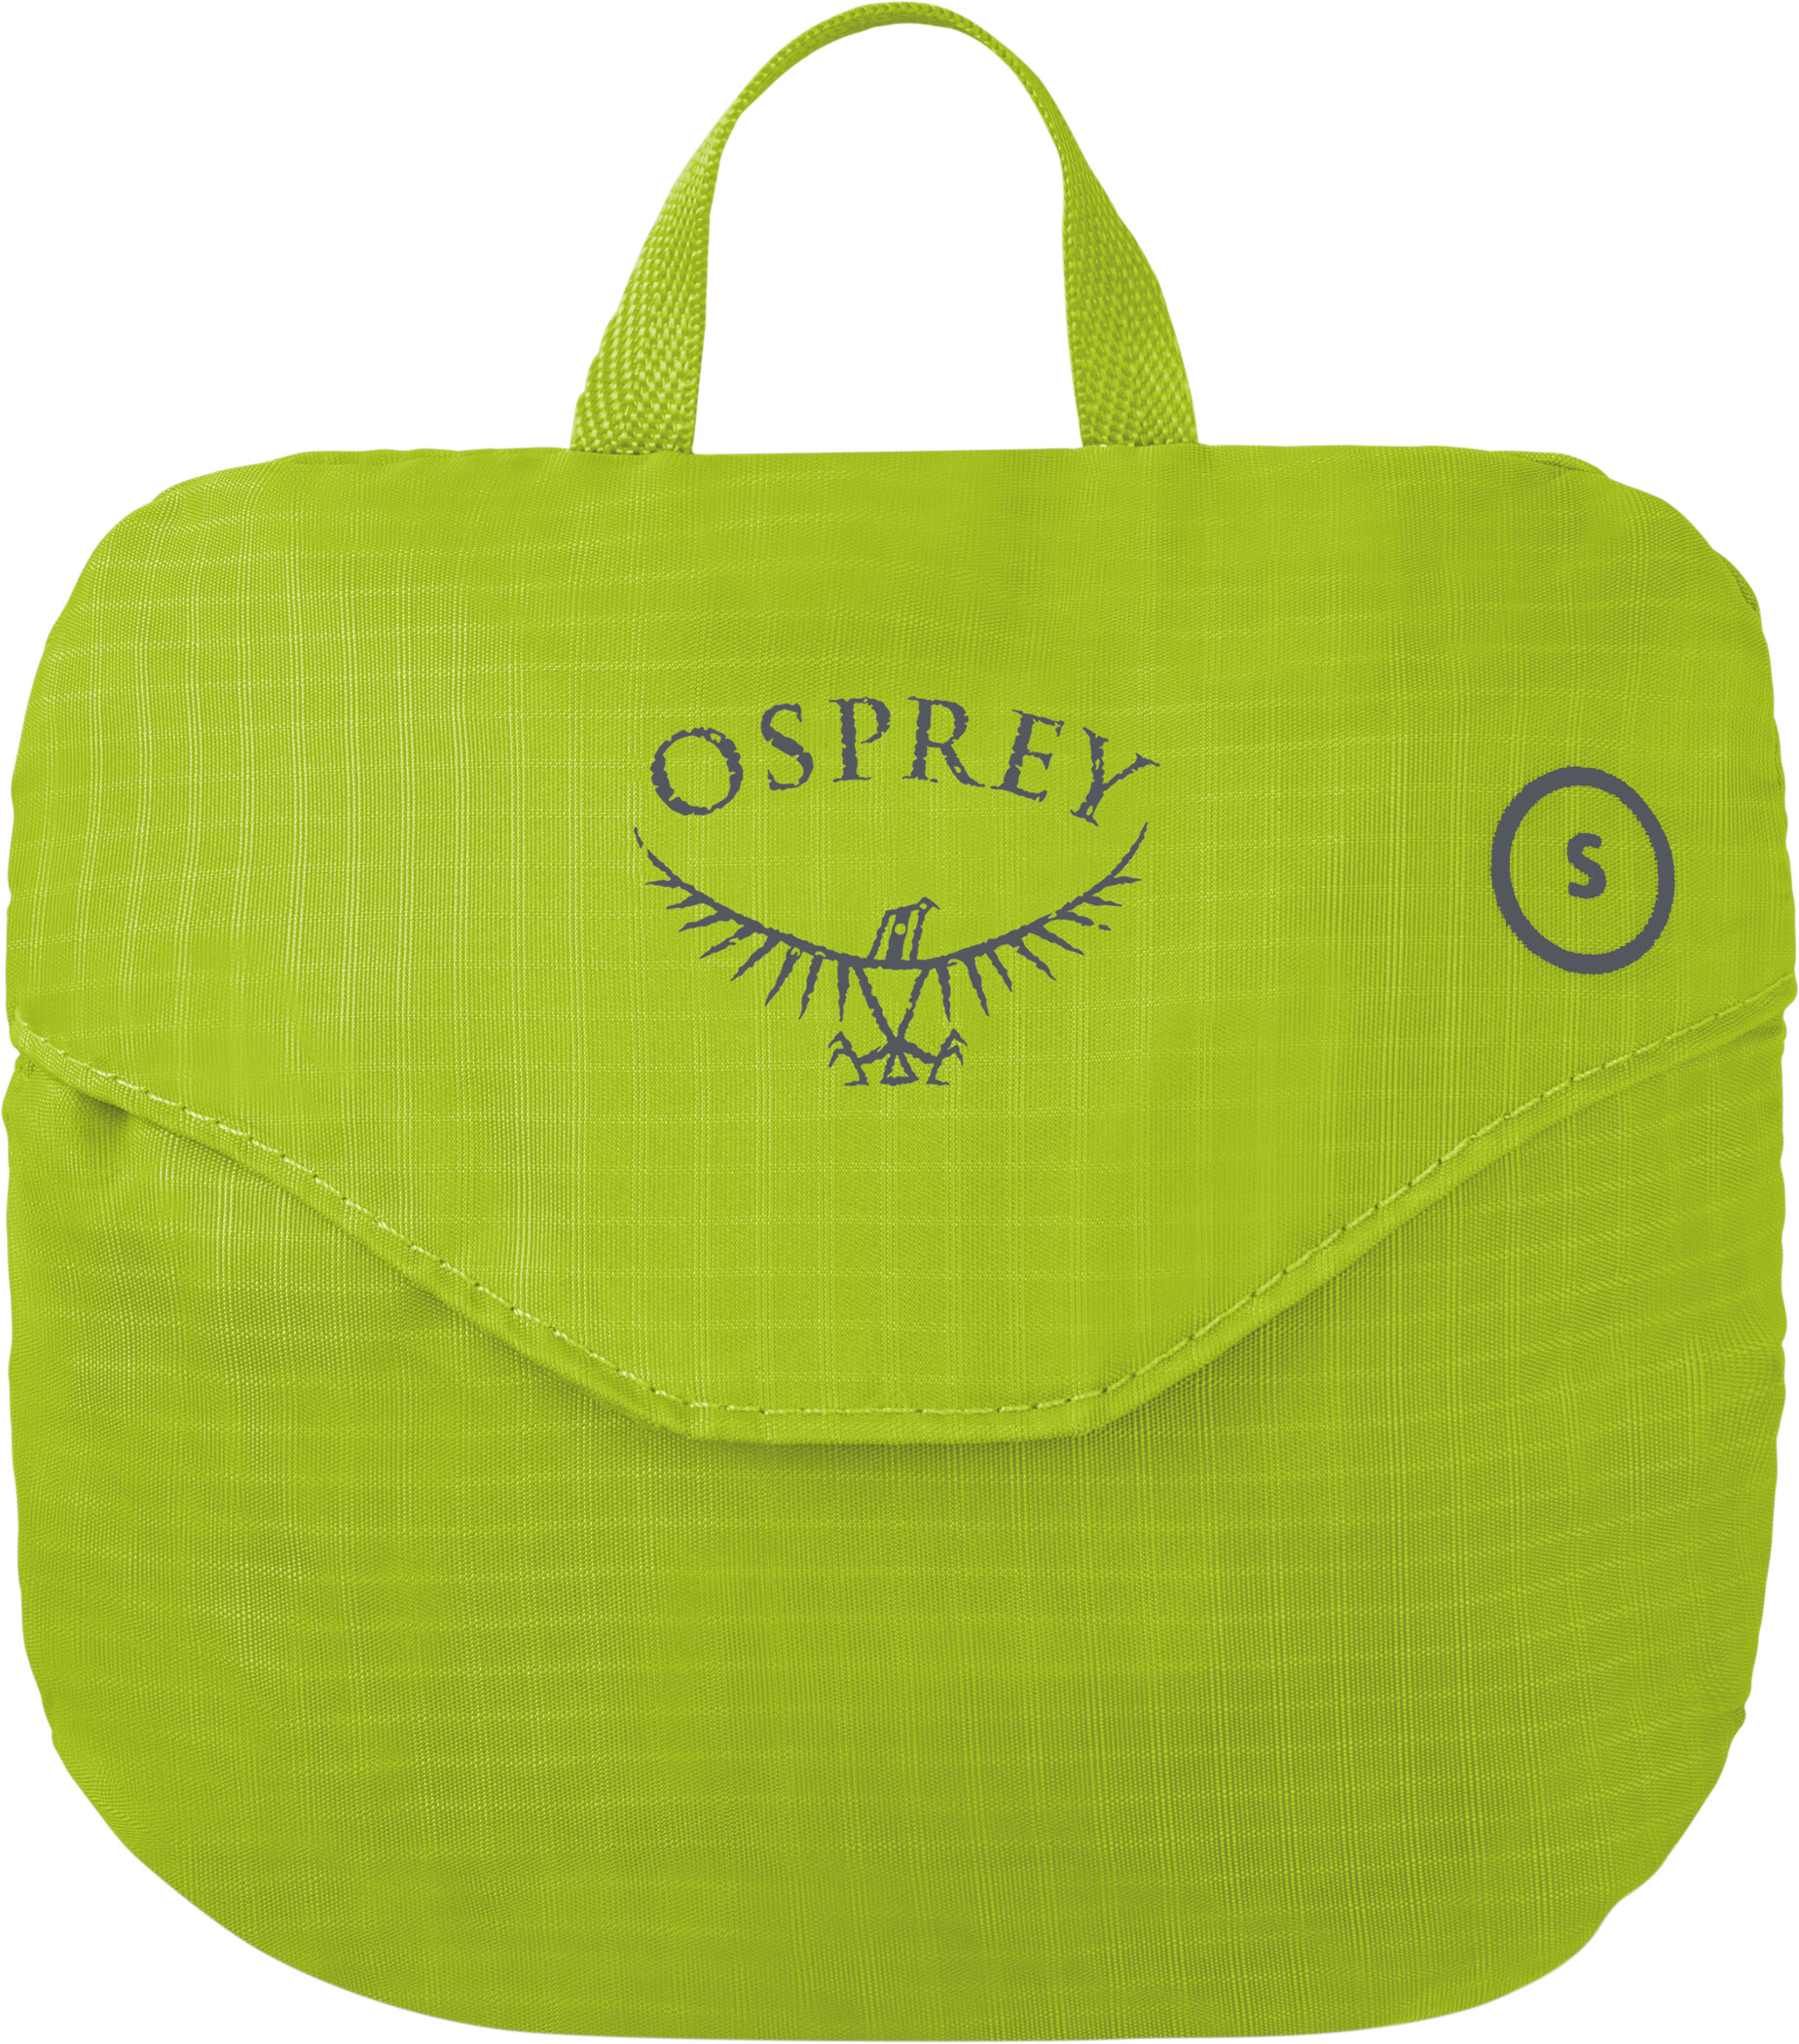 Osprey Hi-Vis Regenschutz S grün